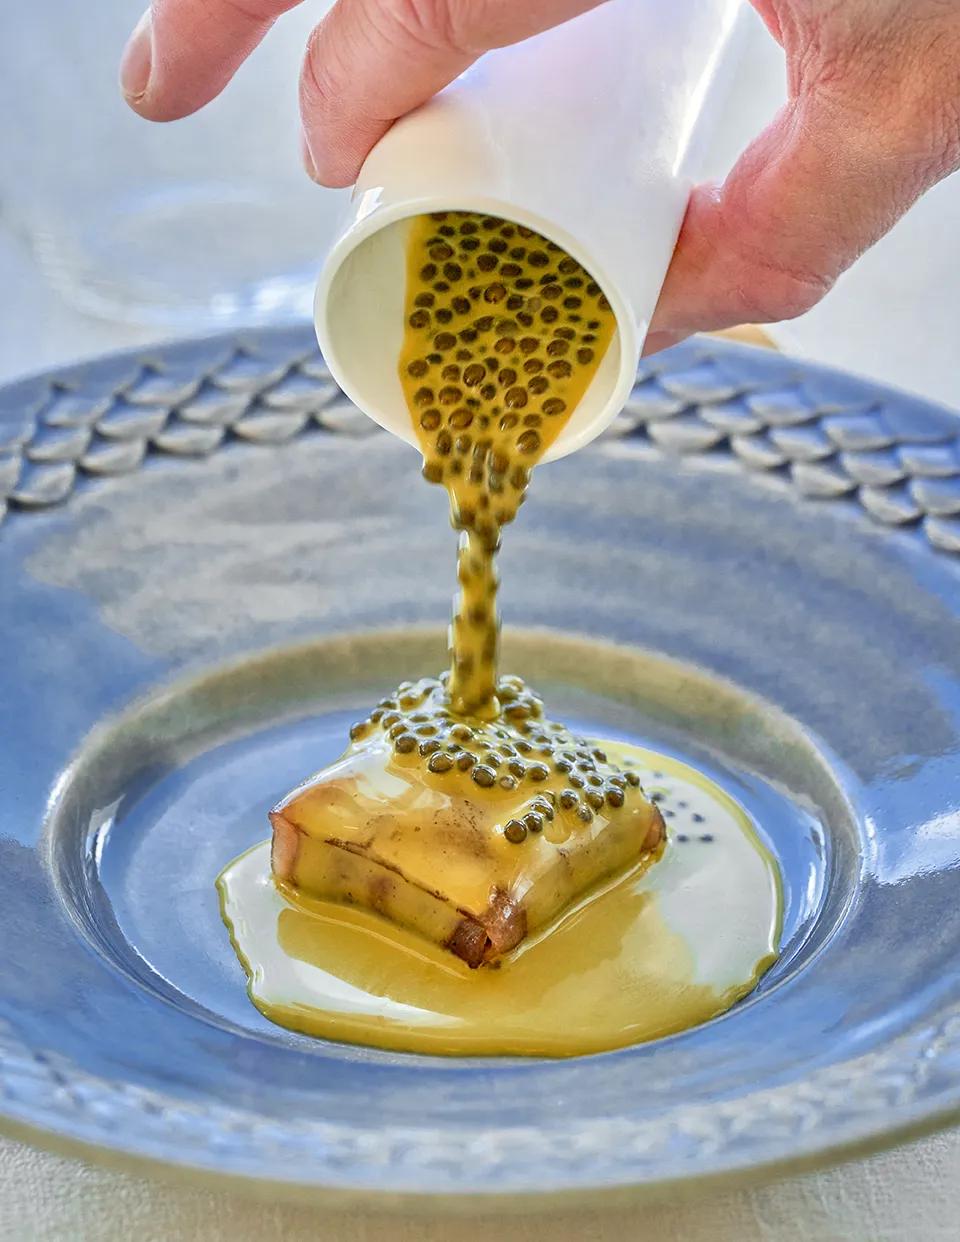 Serving Shipova Caviar sauce on a piece of red tuna